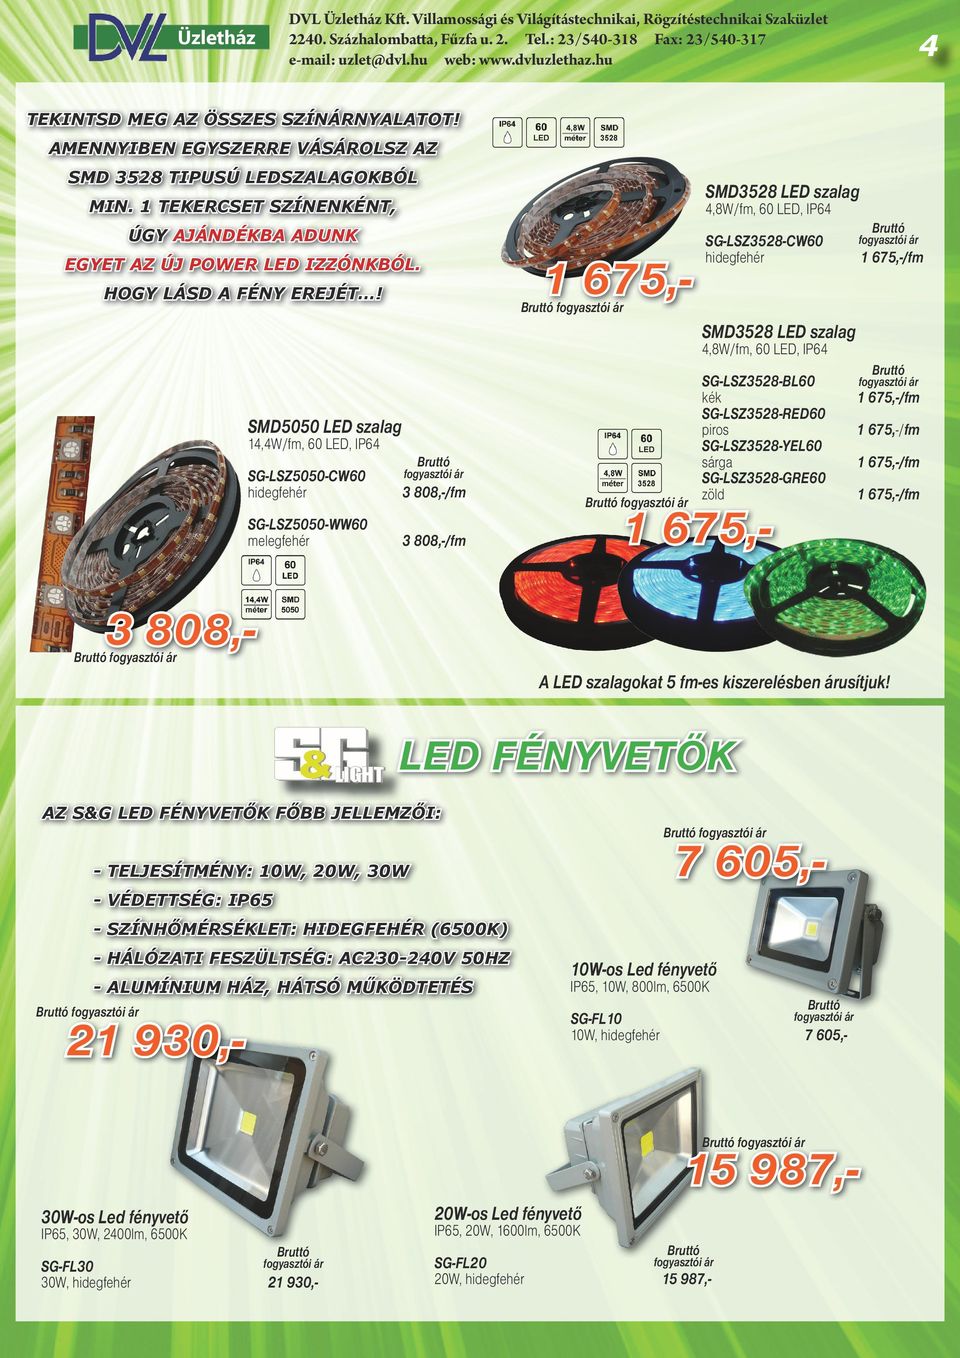 1 675,-/fm SMD3528 LED szalag 4,8W/fm, 60 LED, IP64 SG-LSZ3528-BL60 kék SG-LSZ3528-RED60 piros SG-LSZ3528-YEL60 sárga SG-LSZ3528-GRE60 zöld SMD5050 LED szalag 14,4W/fm, 60 LED, IP64 SG-LSZ5050-CW60